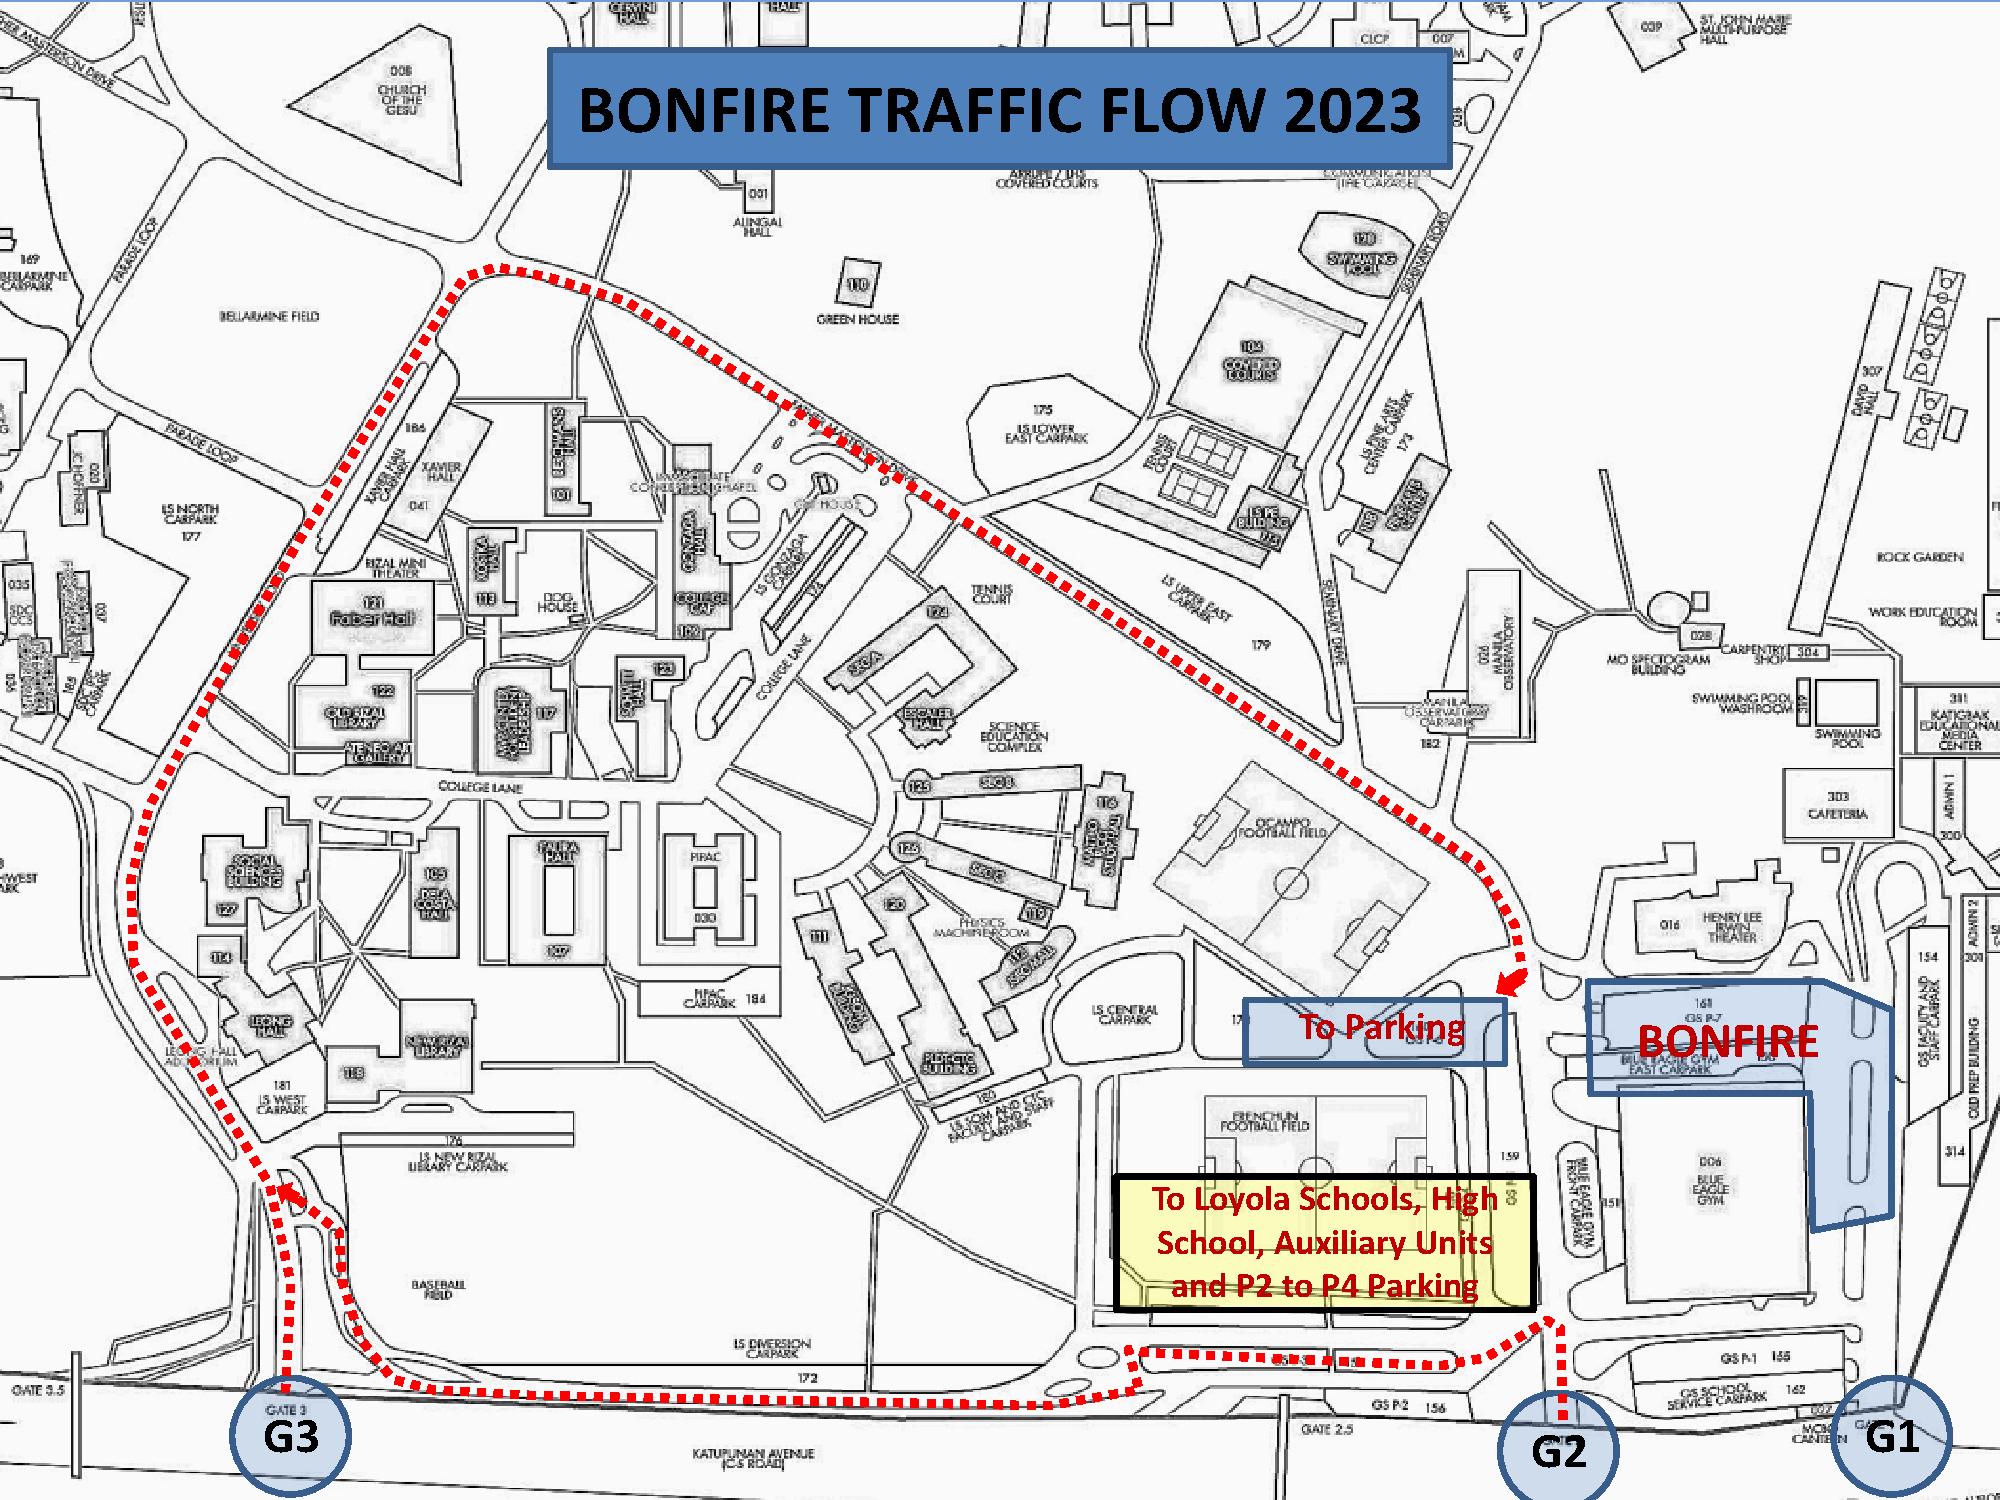 Bonfire traffic flow